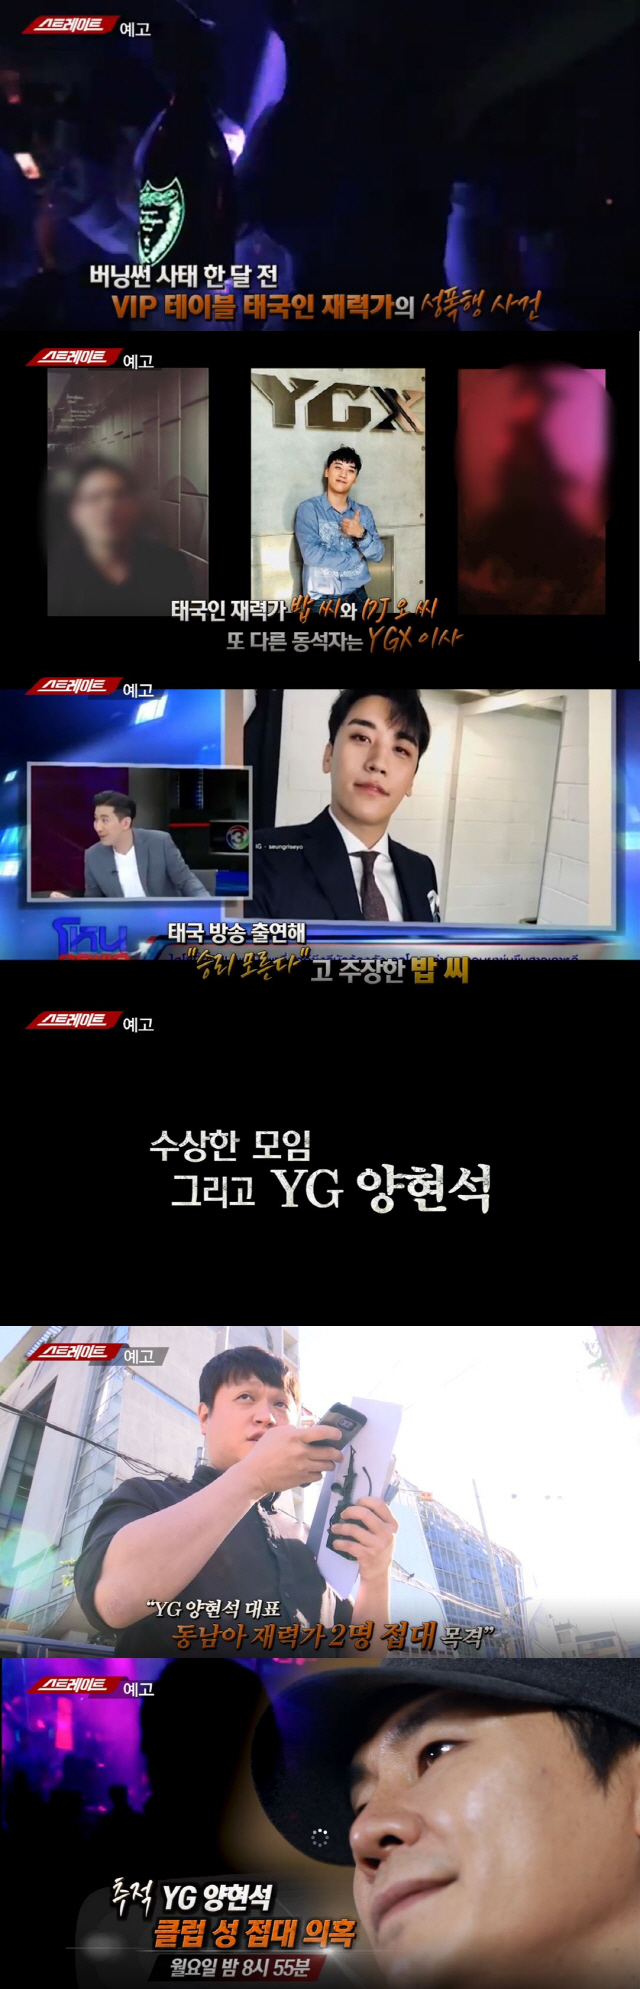  YG 양현석, 동남아 재력가 성접대 의혹…승리 '버닝썬'과도 연루